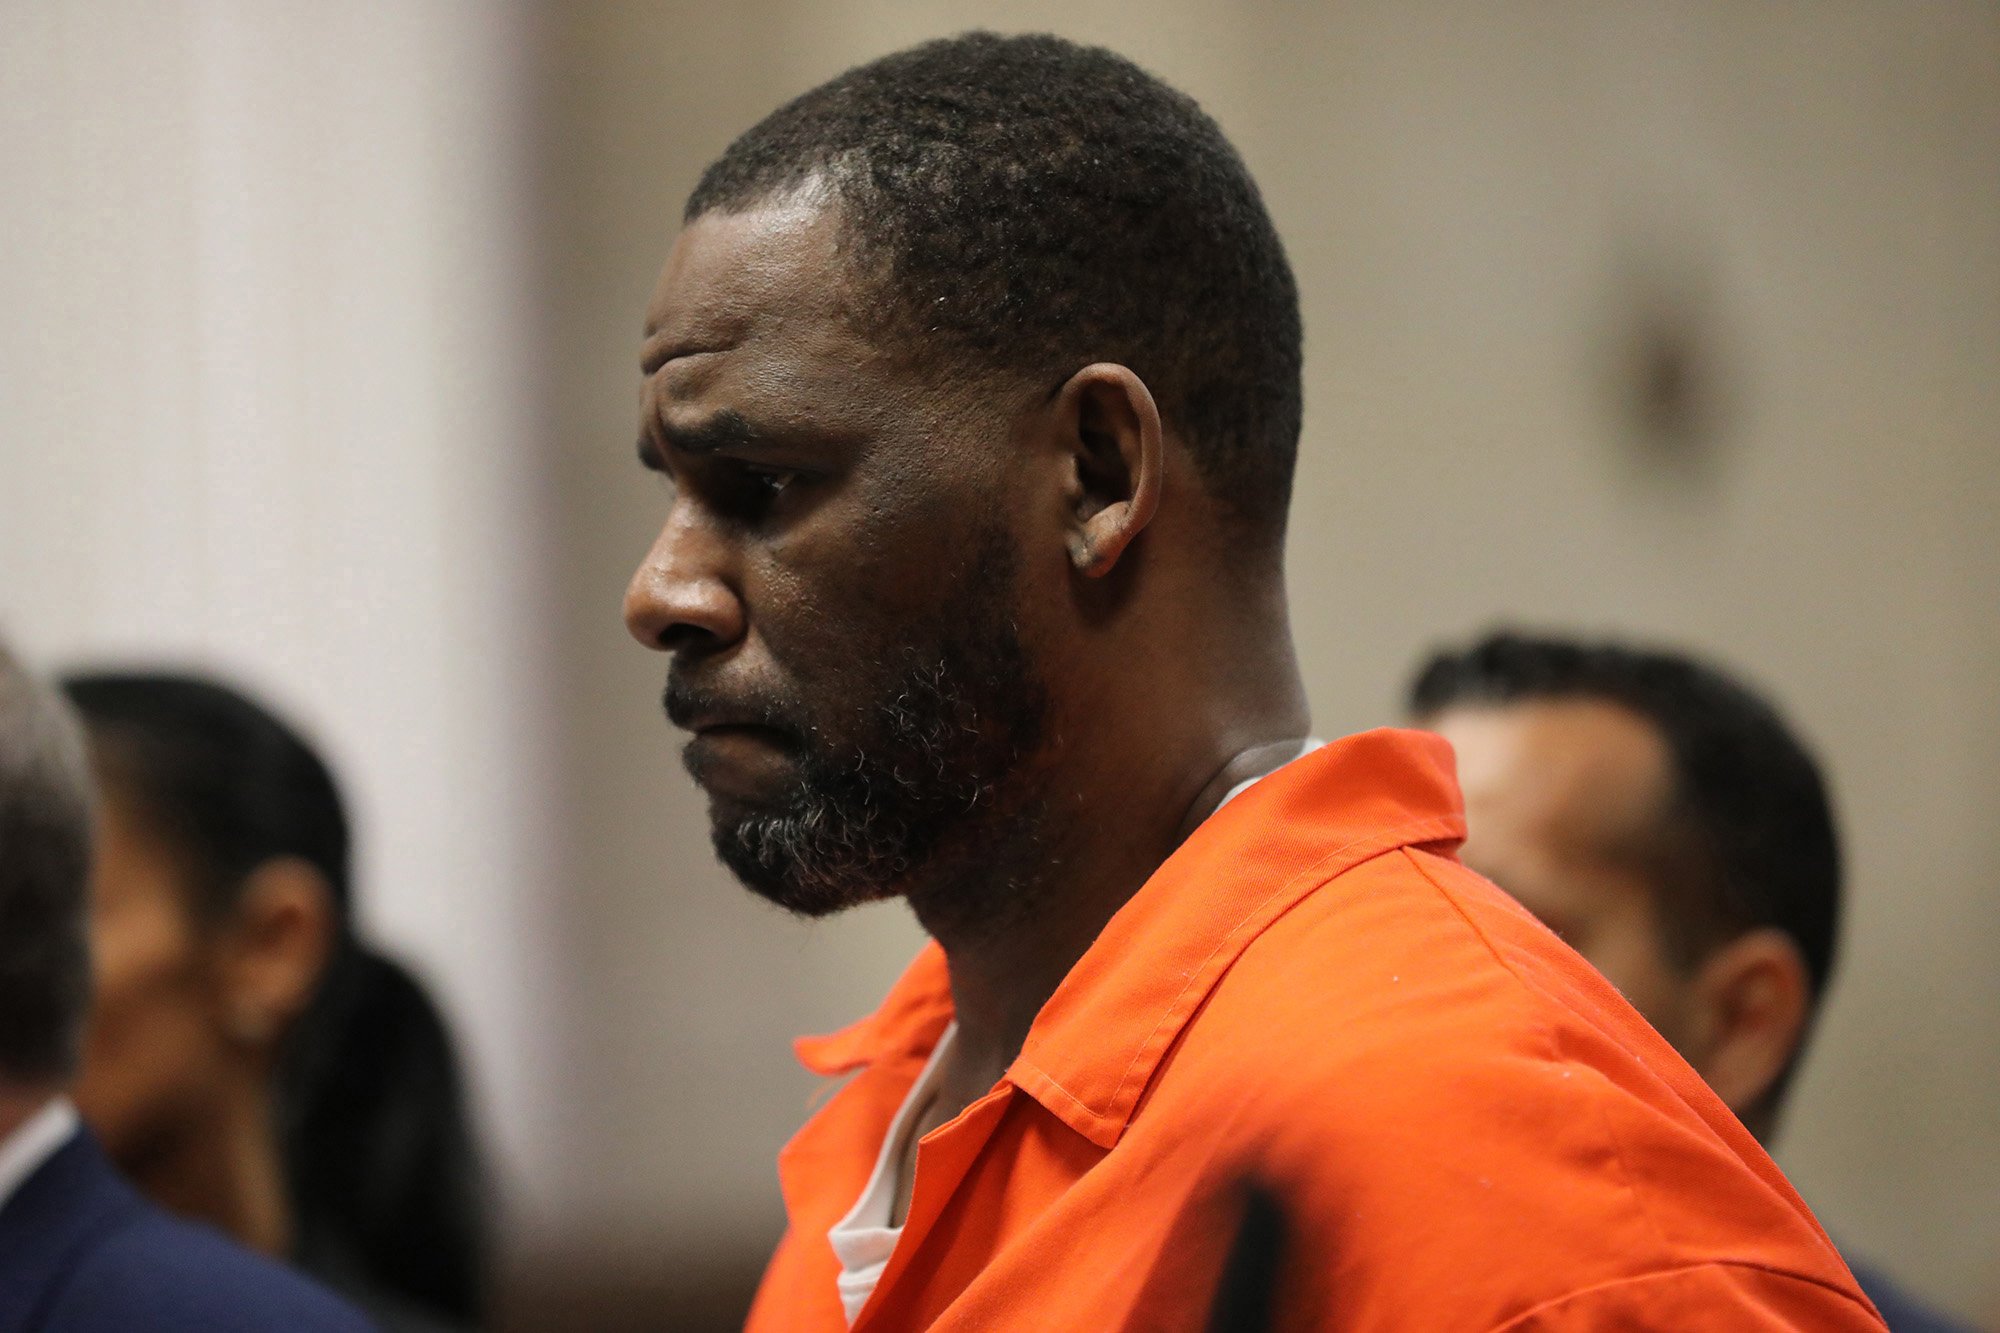 R. Kelly, sentenced to 30 years in prison, appears in court wearing an orange jumpsuit.